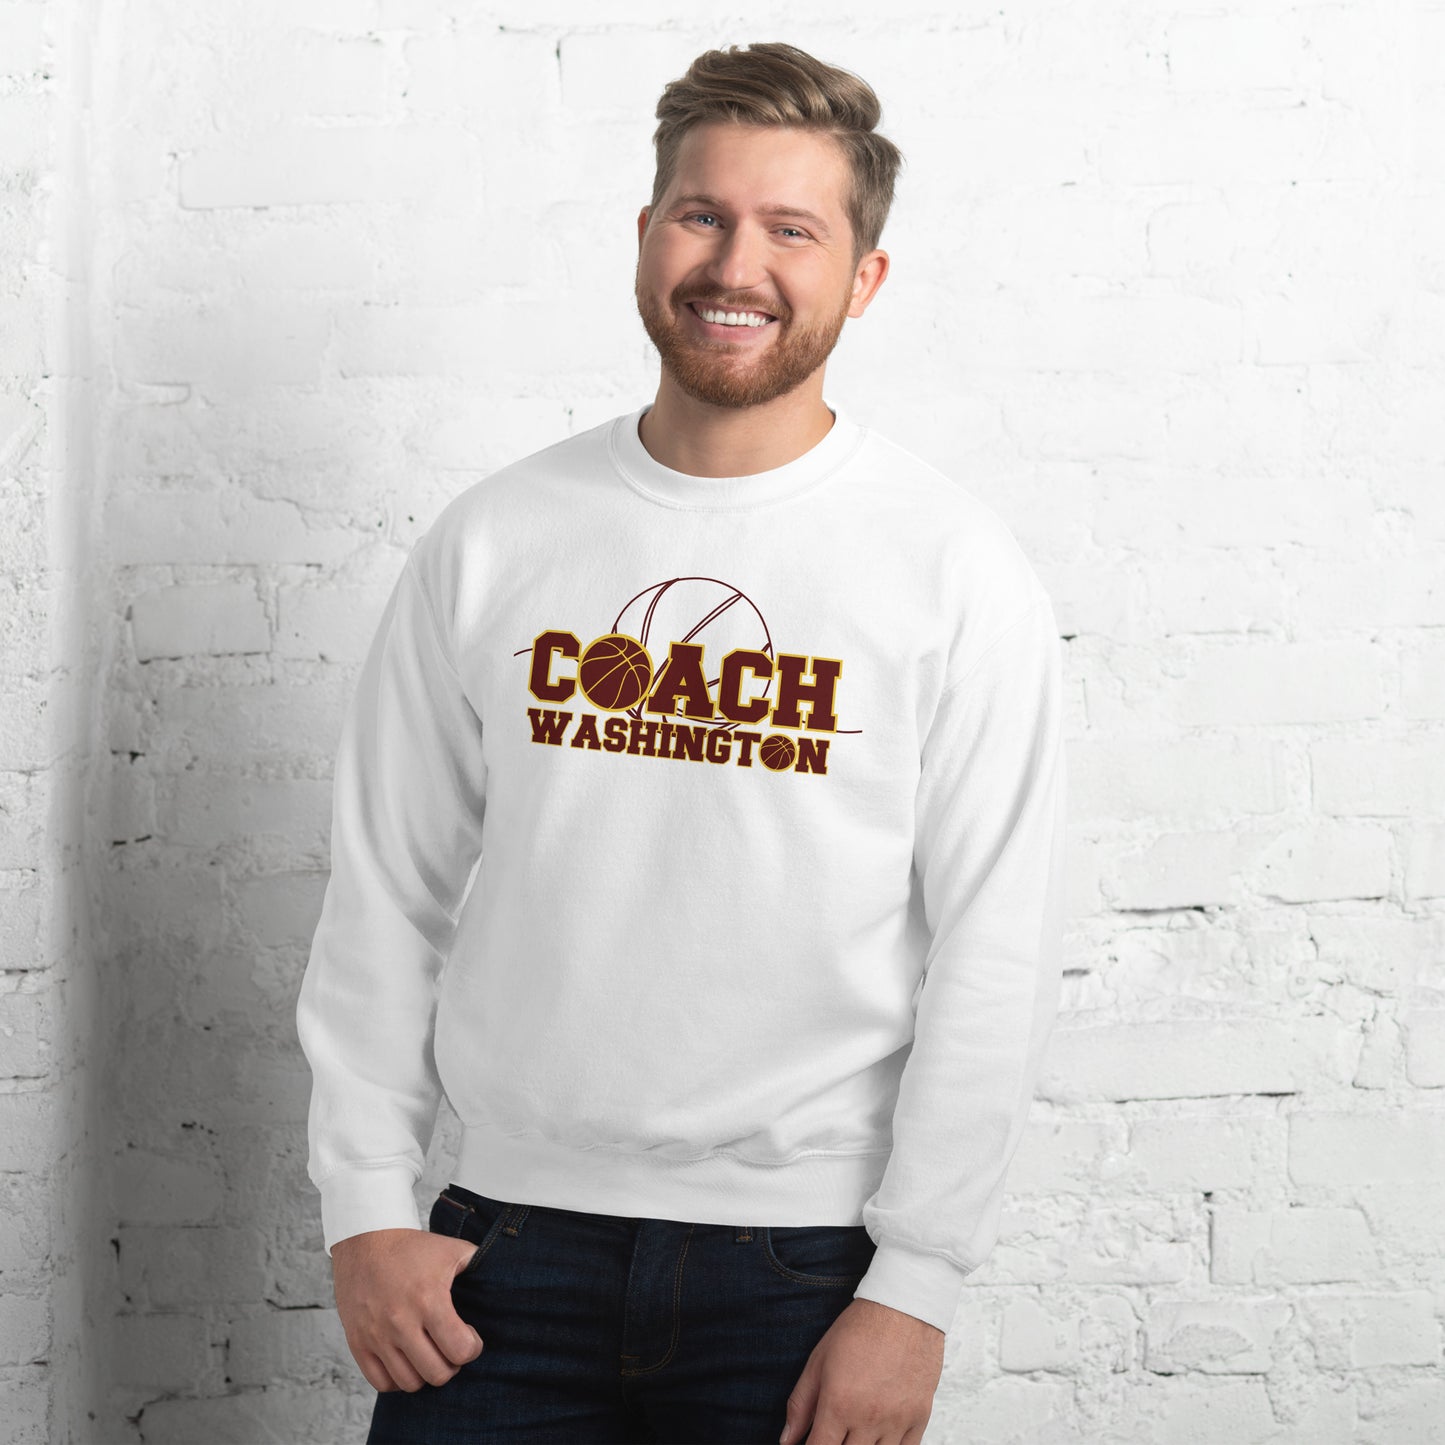 Coach Washington Sweatshirt